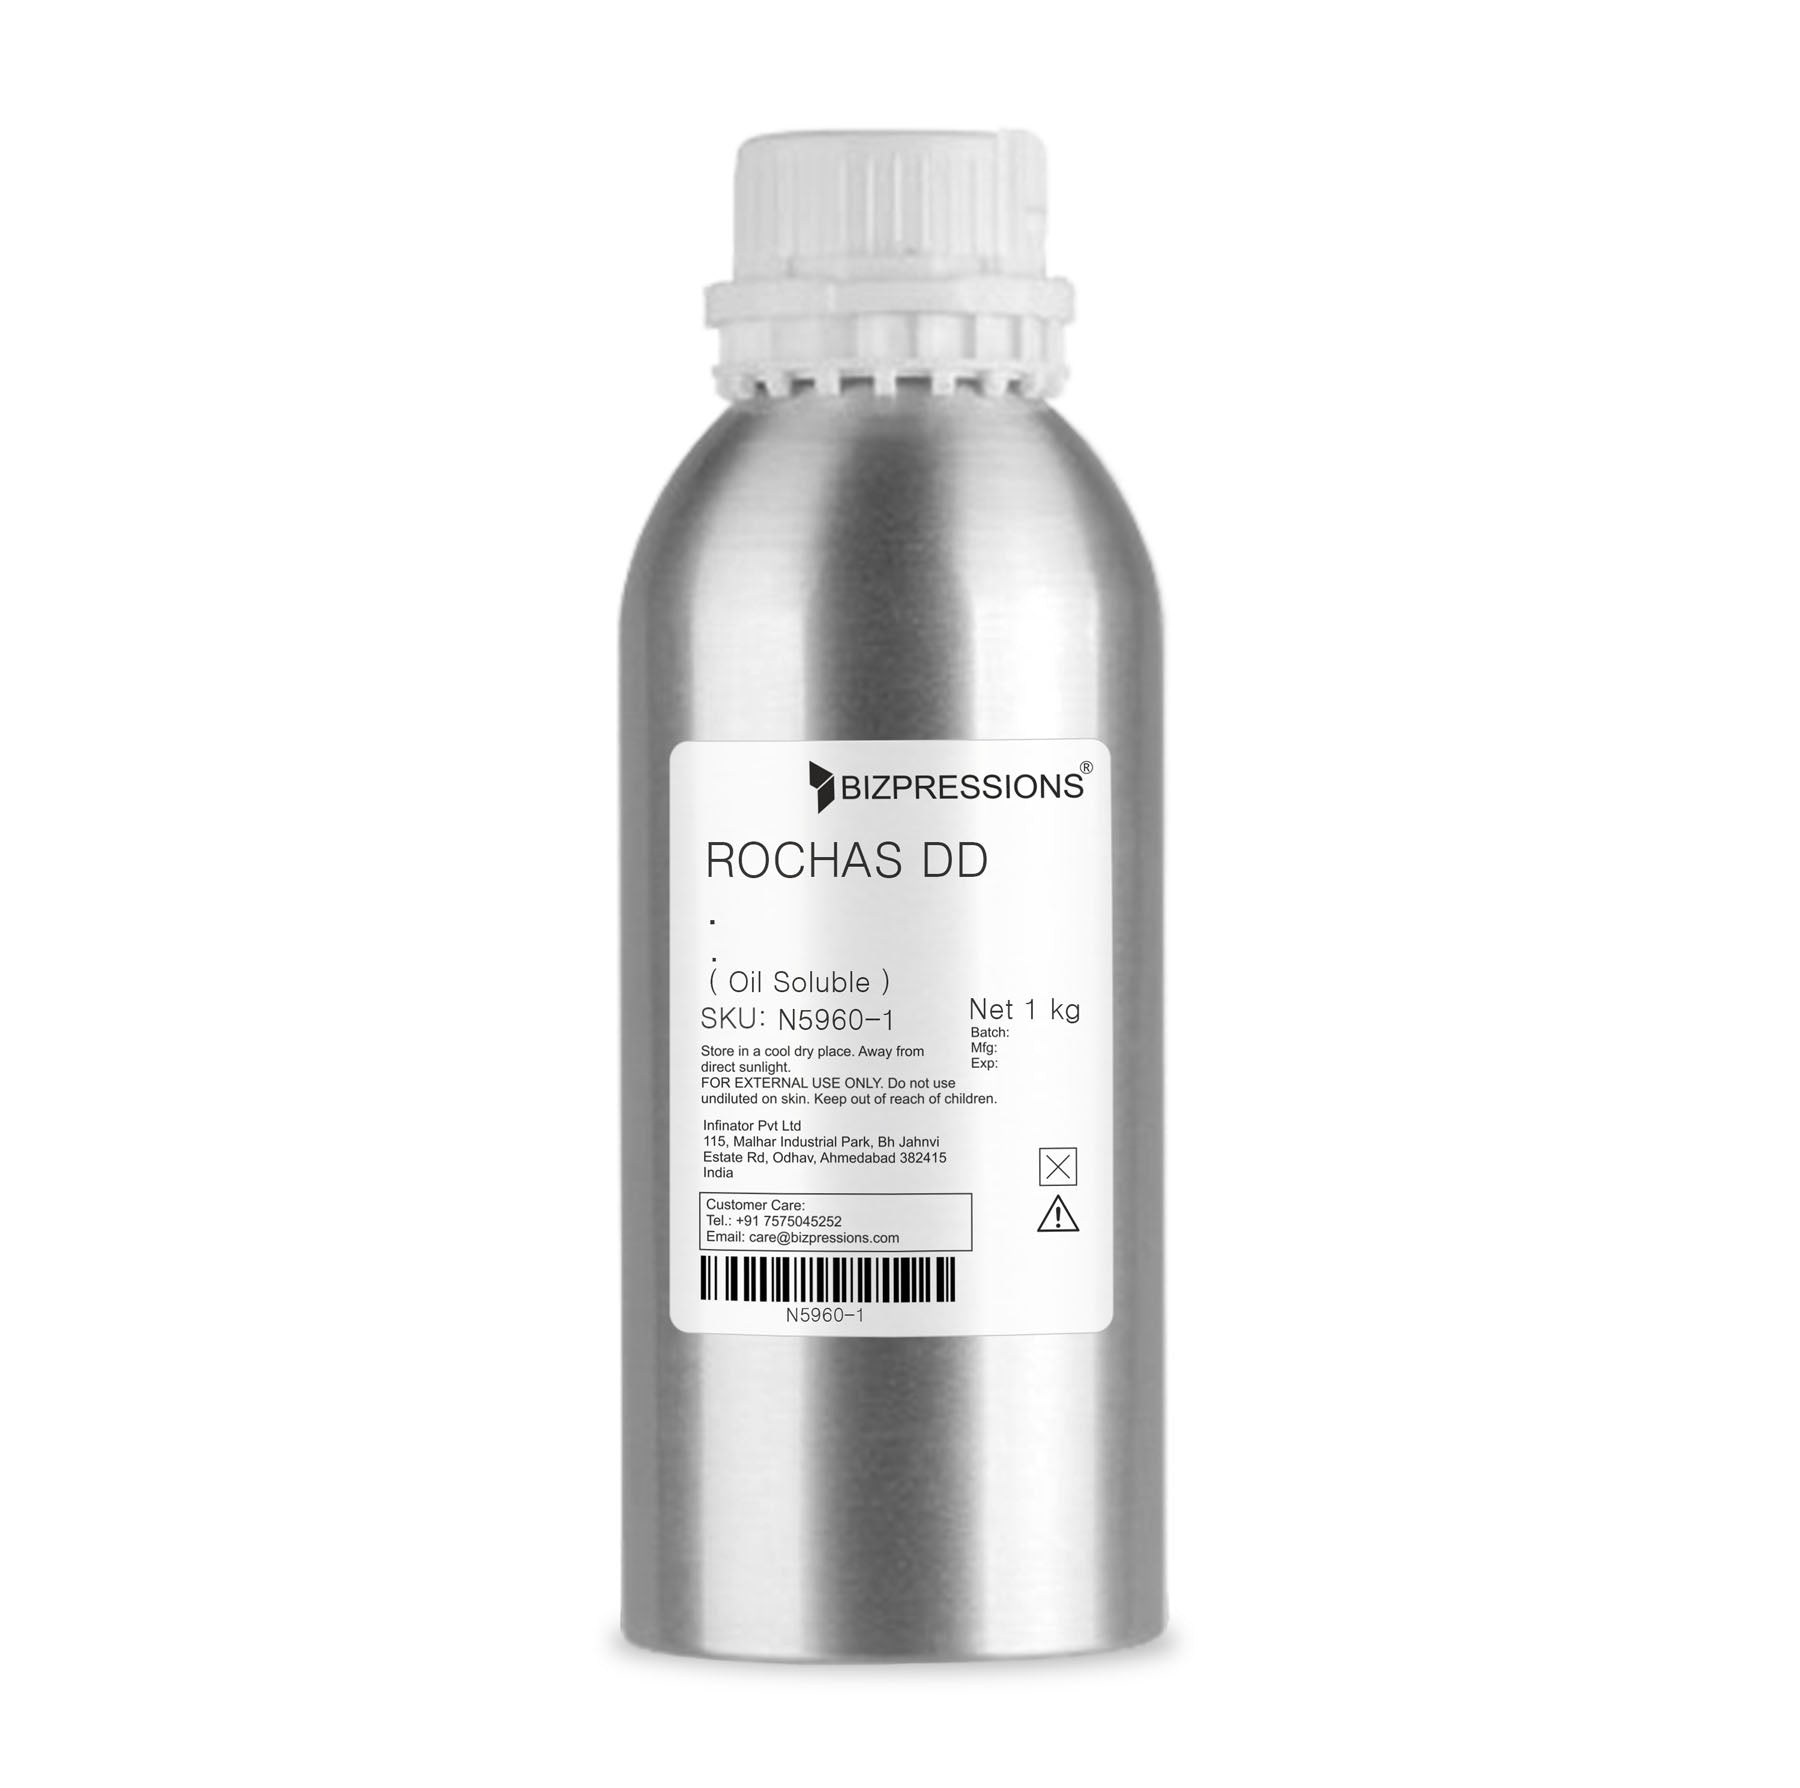 ROCHAS DD - Fragrance ( Oil Soluble ) - 1 kg